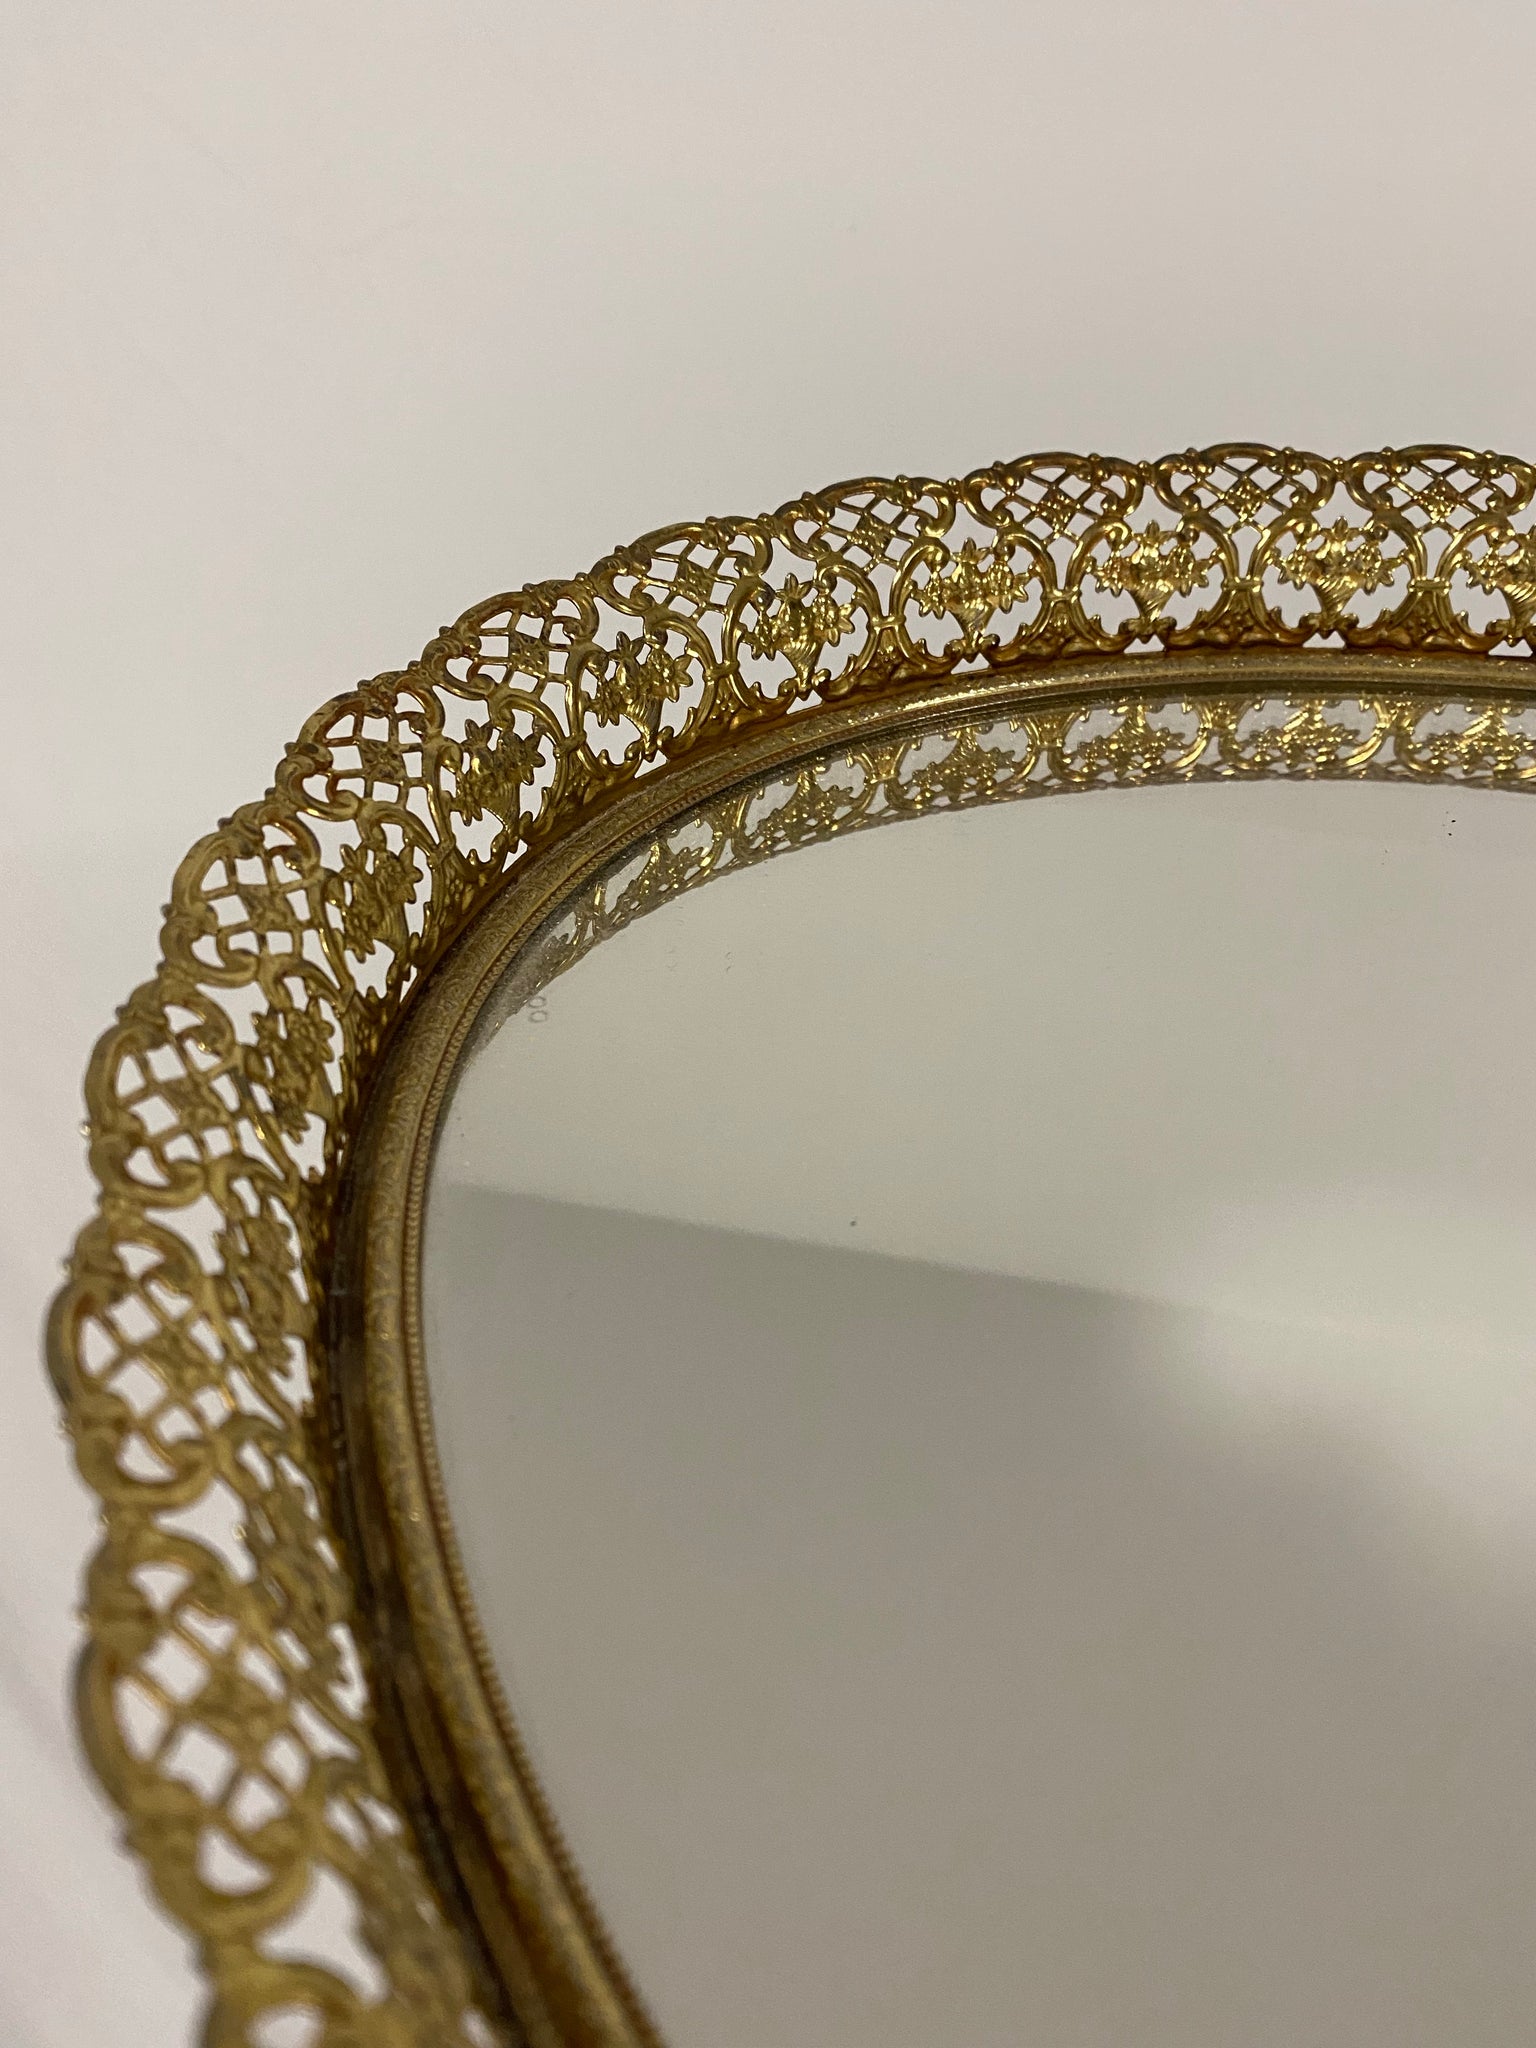 Ornate oval mirror tray